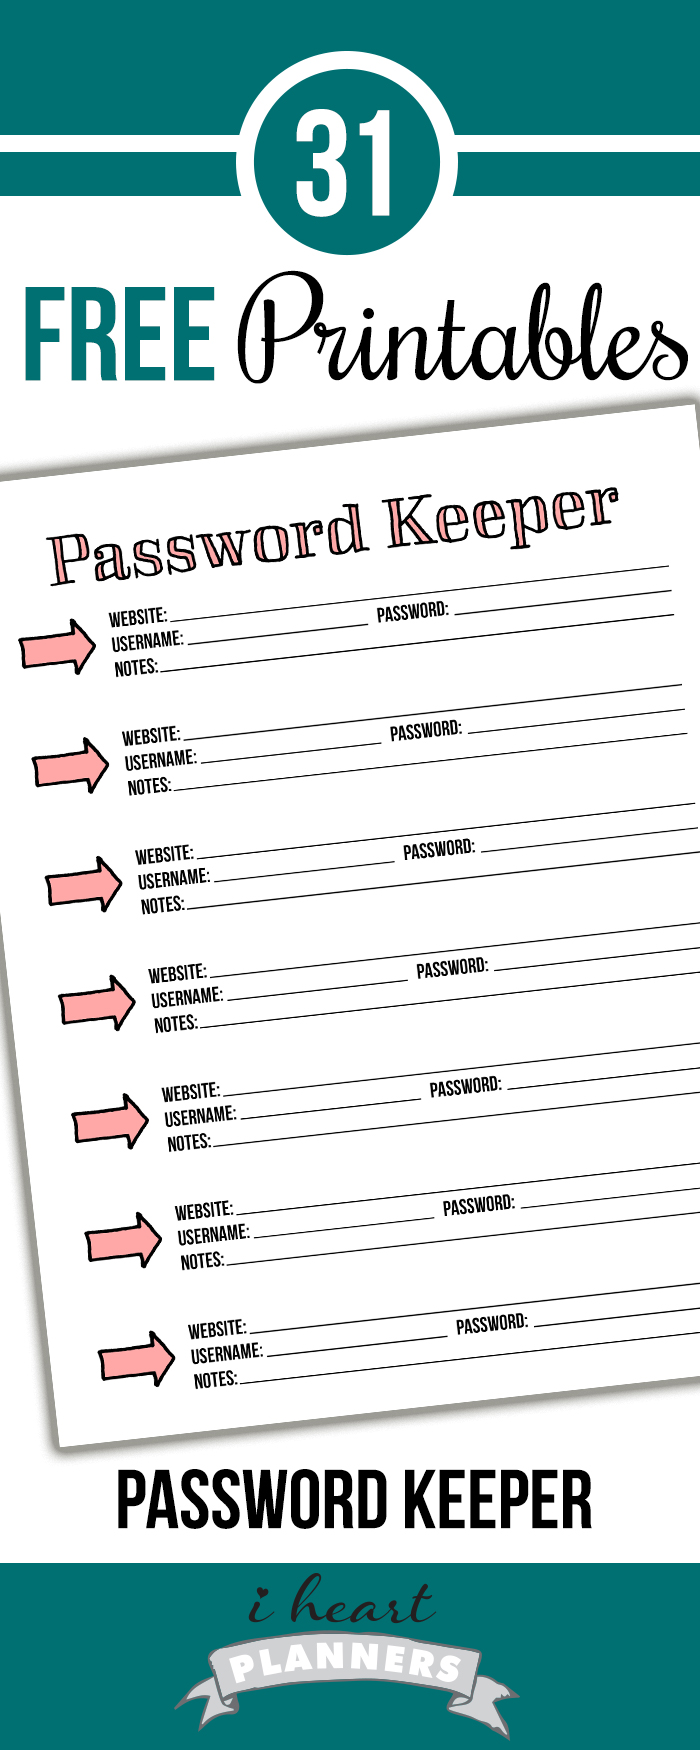 Free Printable Password Tracker! #passwordkeeper